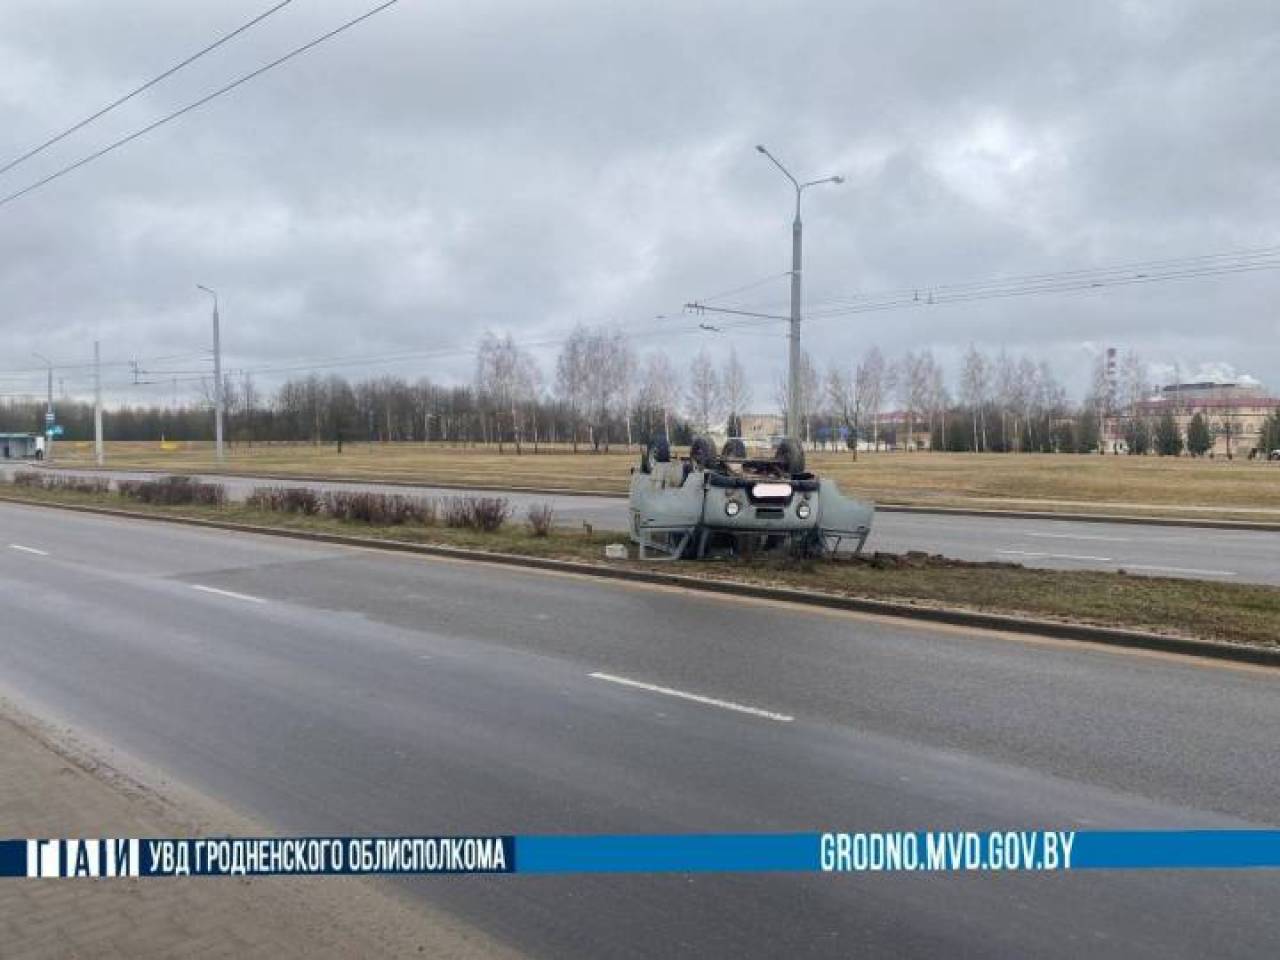 Появилось видео опрокидывания «буханки» в Гродно: на помощь оперативно пришли сотрудники Департамента охраны